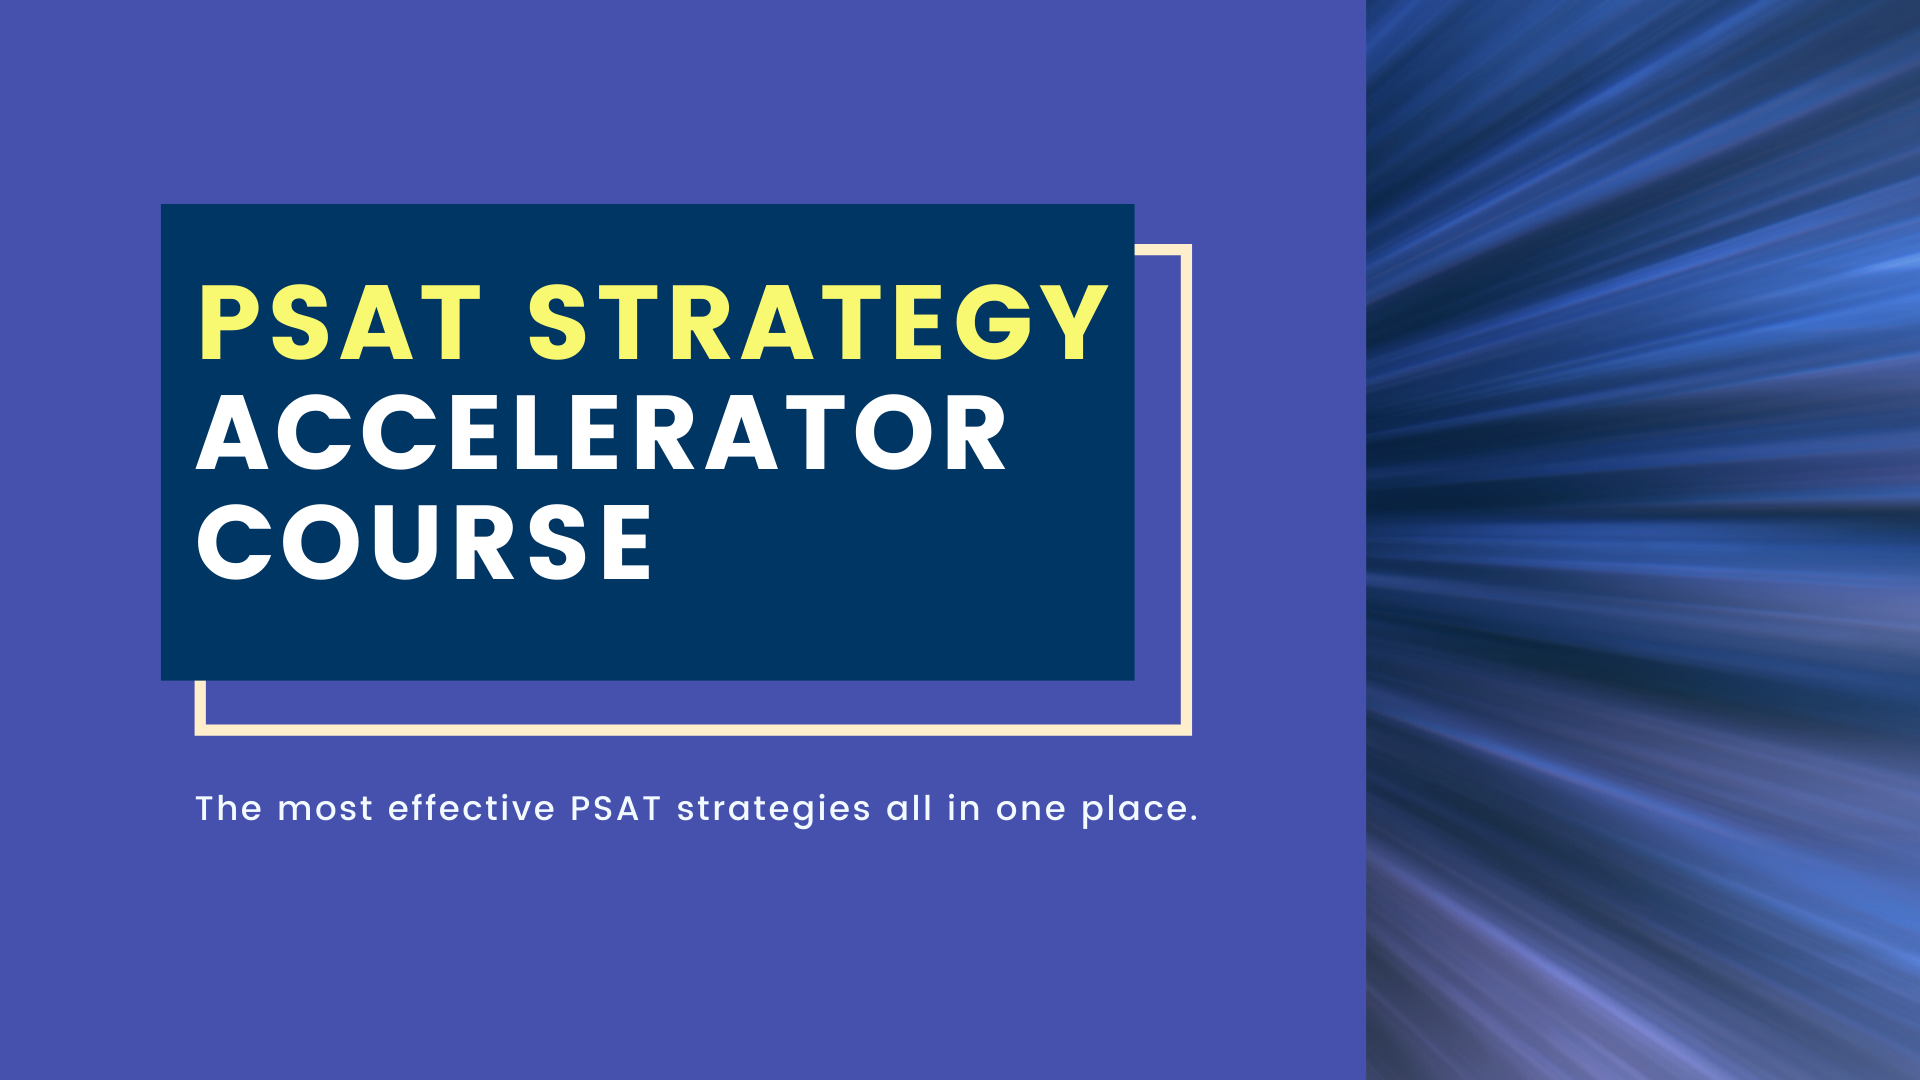 PSAT Strategy Accelerator Course